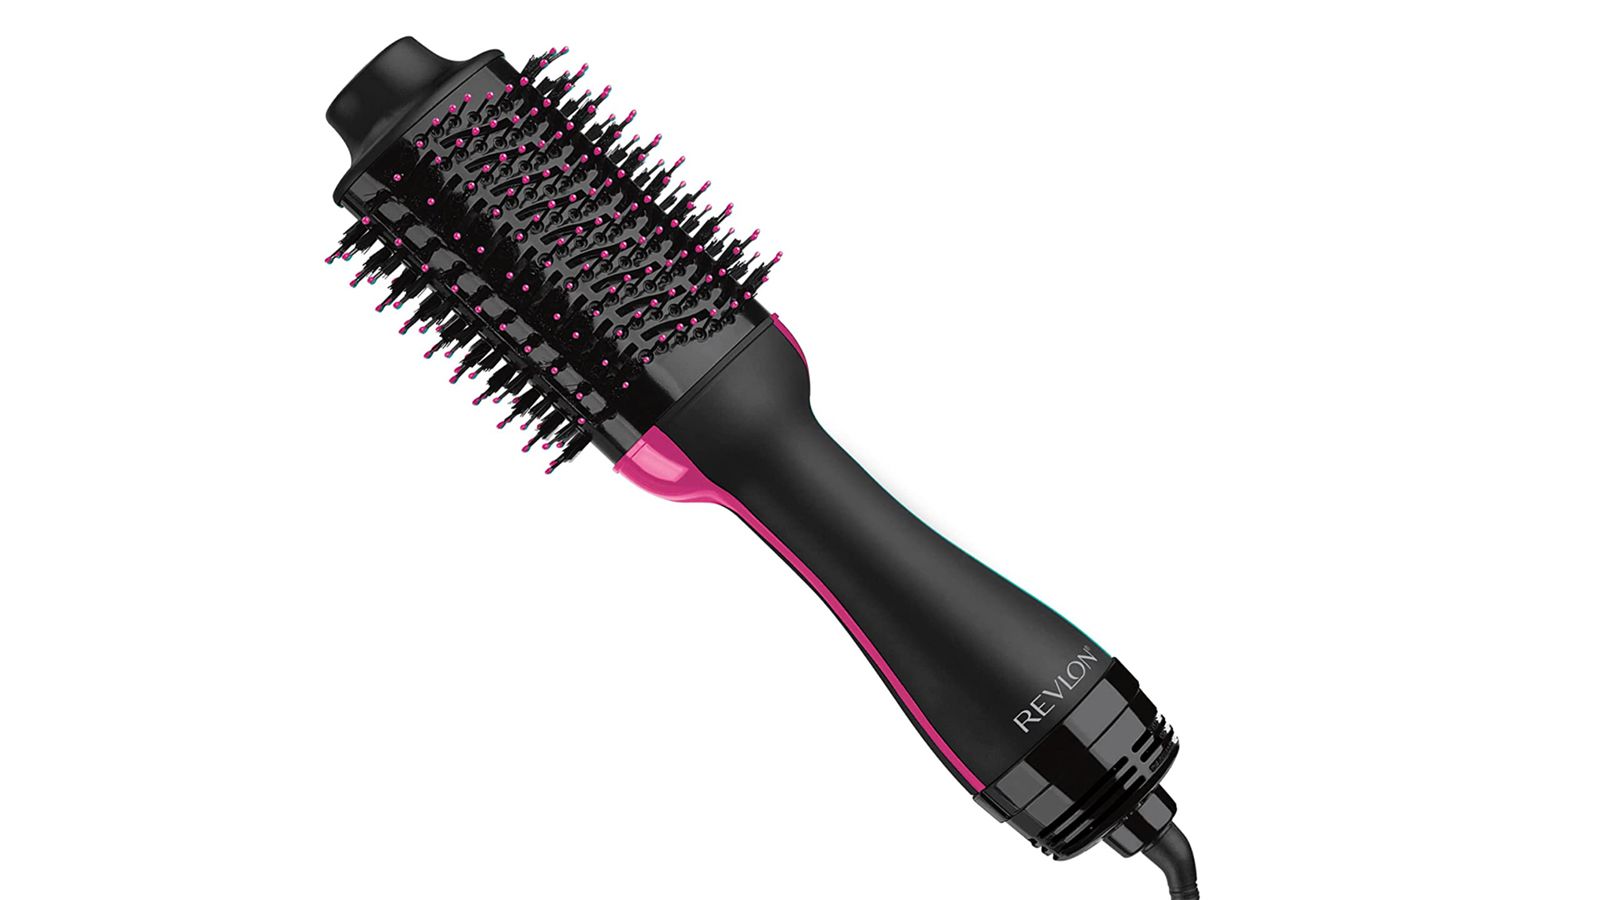 Revlon One-Step sale: Save on a top hair dryer | CNN Underscored